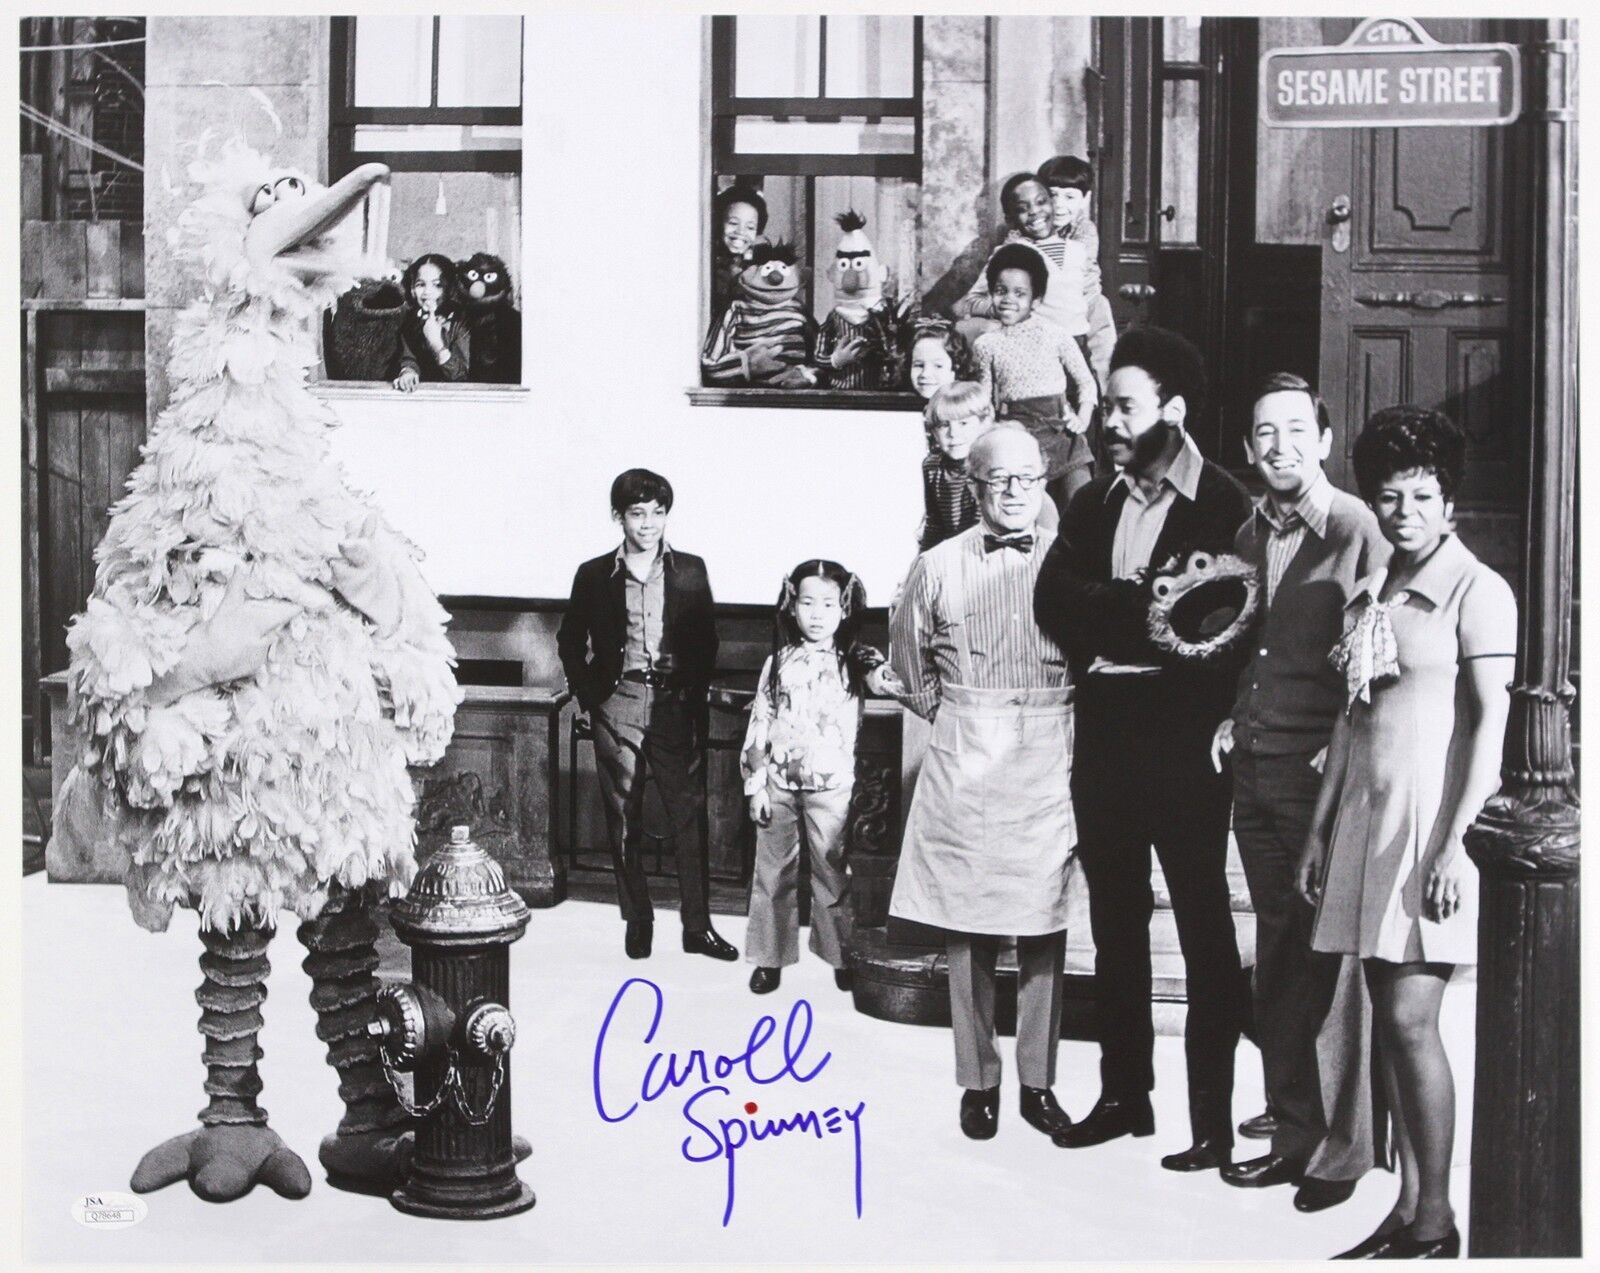 1969 Caroll Spinney “Big Bird” On Sesame Street LE Signed 16x20 B&W Photo (JSA)